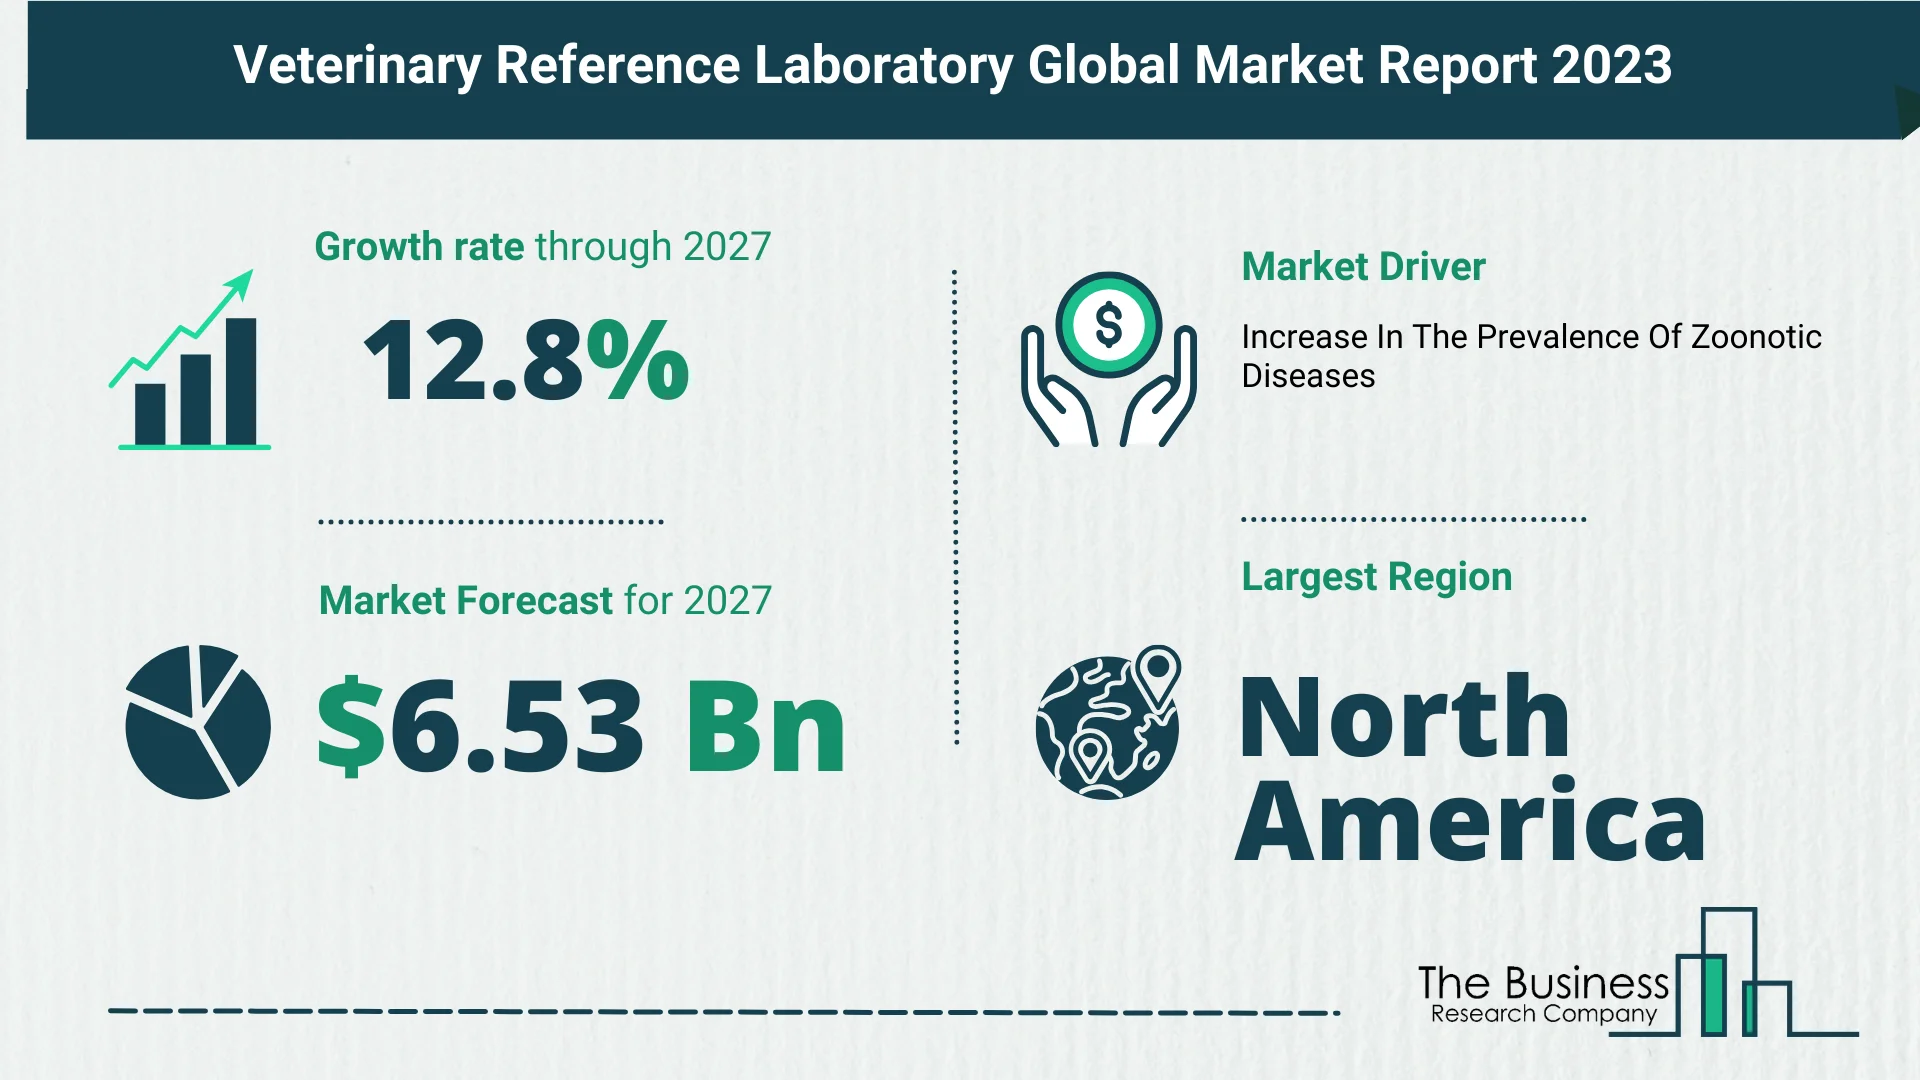 Global Veterinary Reference Laboratory Market Size